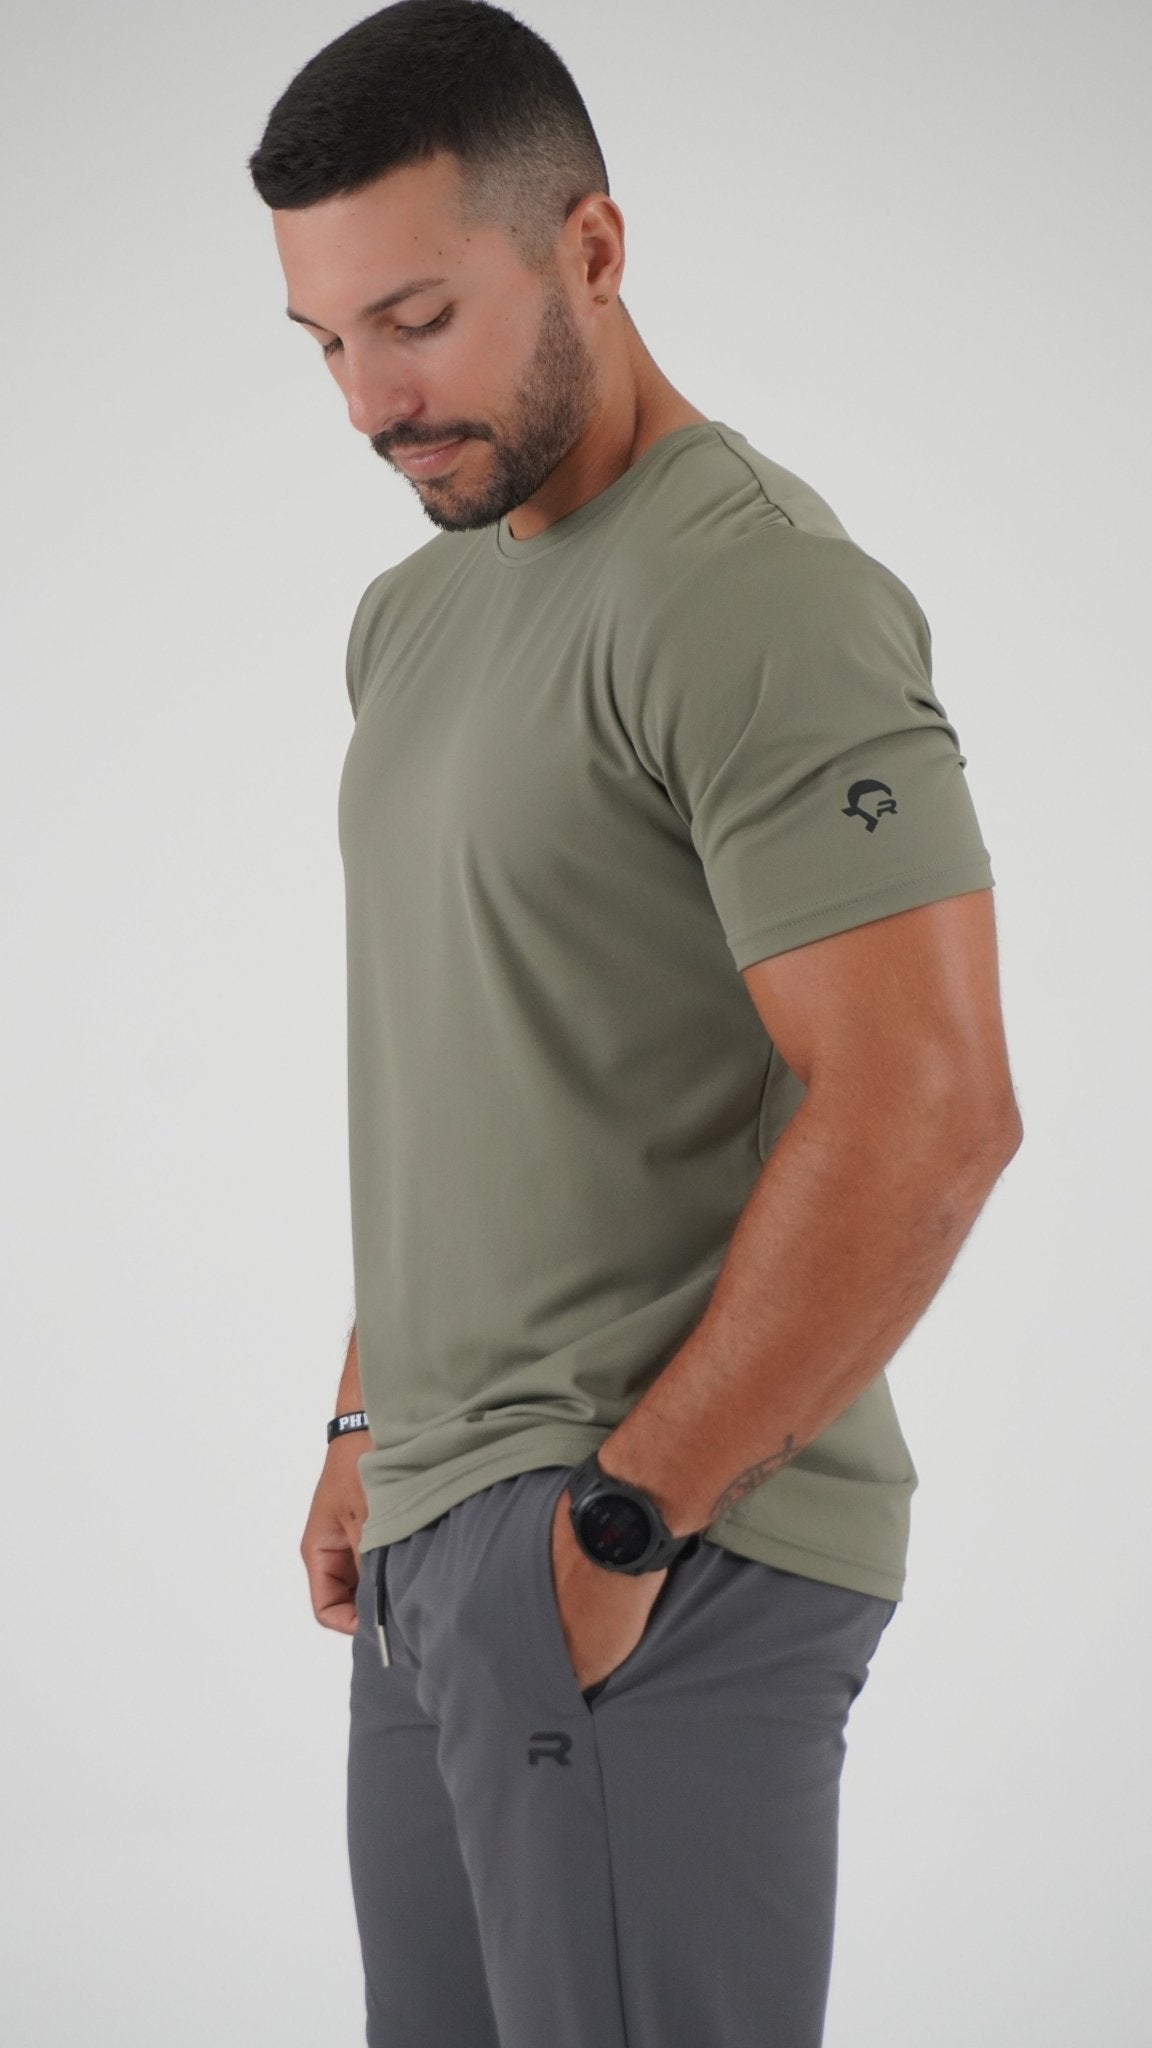 RESILIENT Prime Fit Shirt - Resilient Active